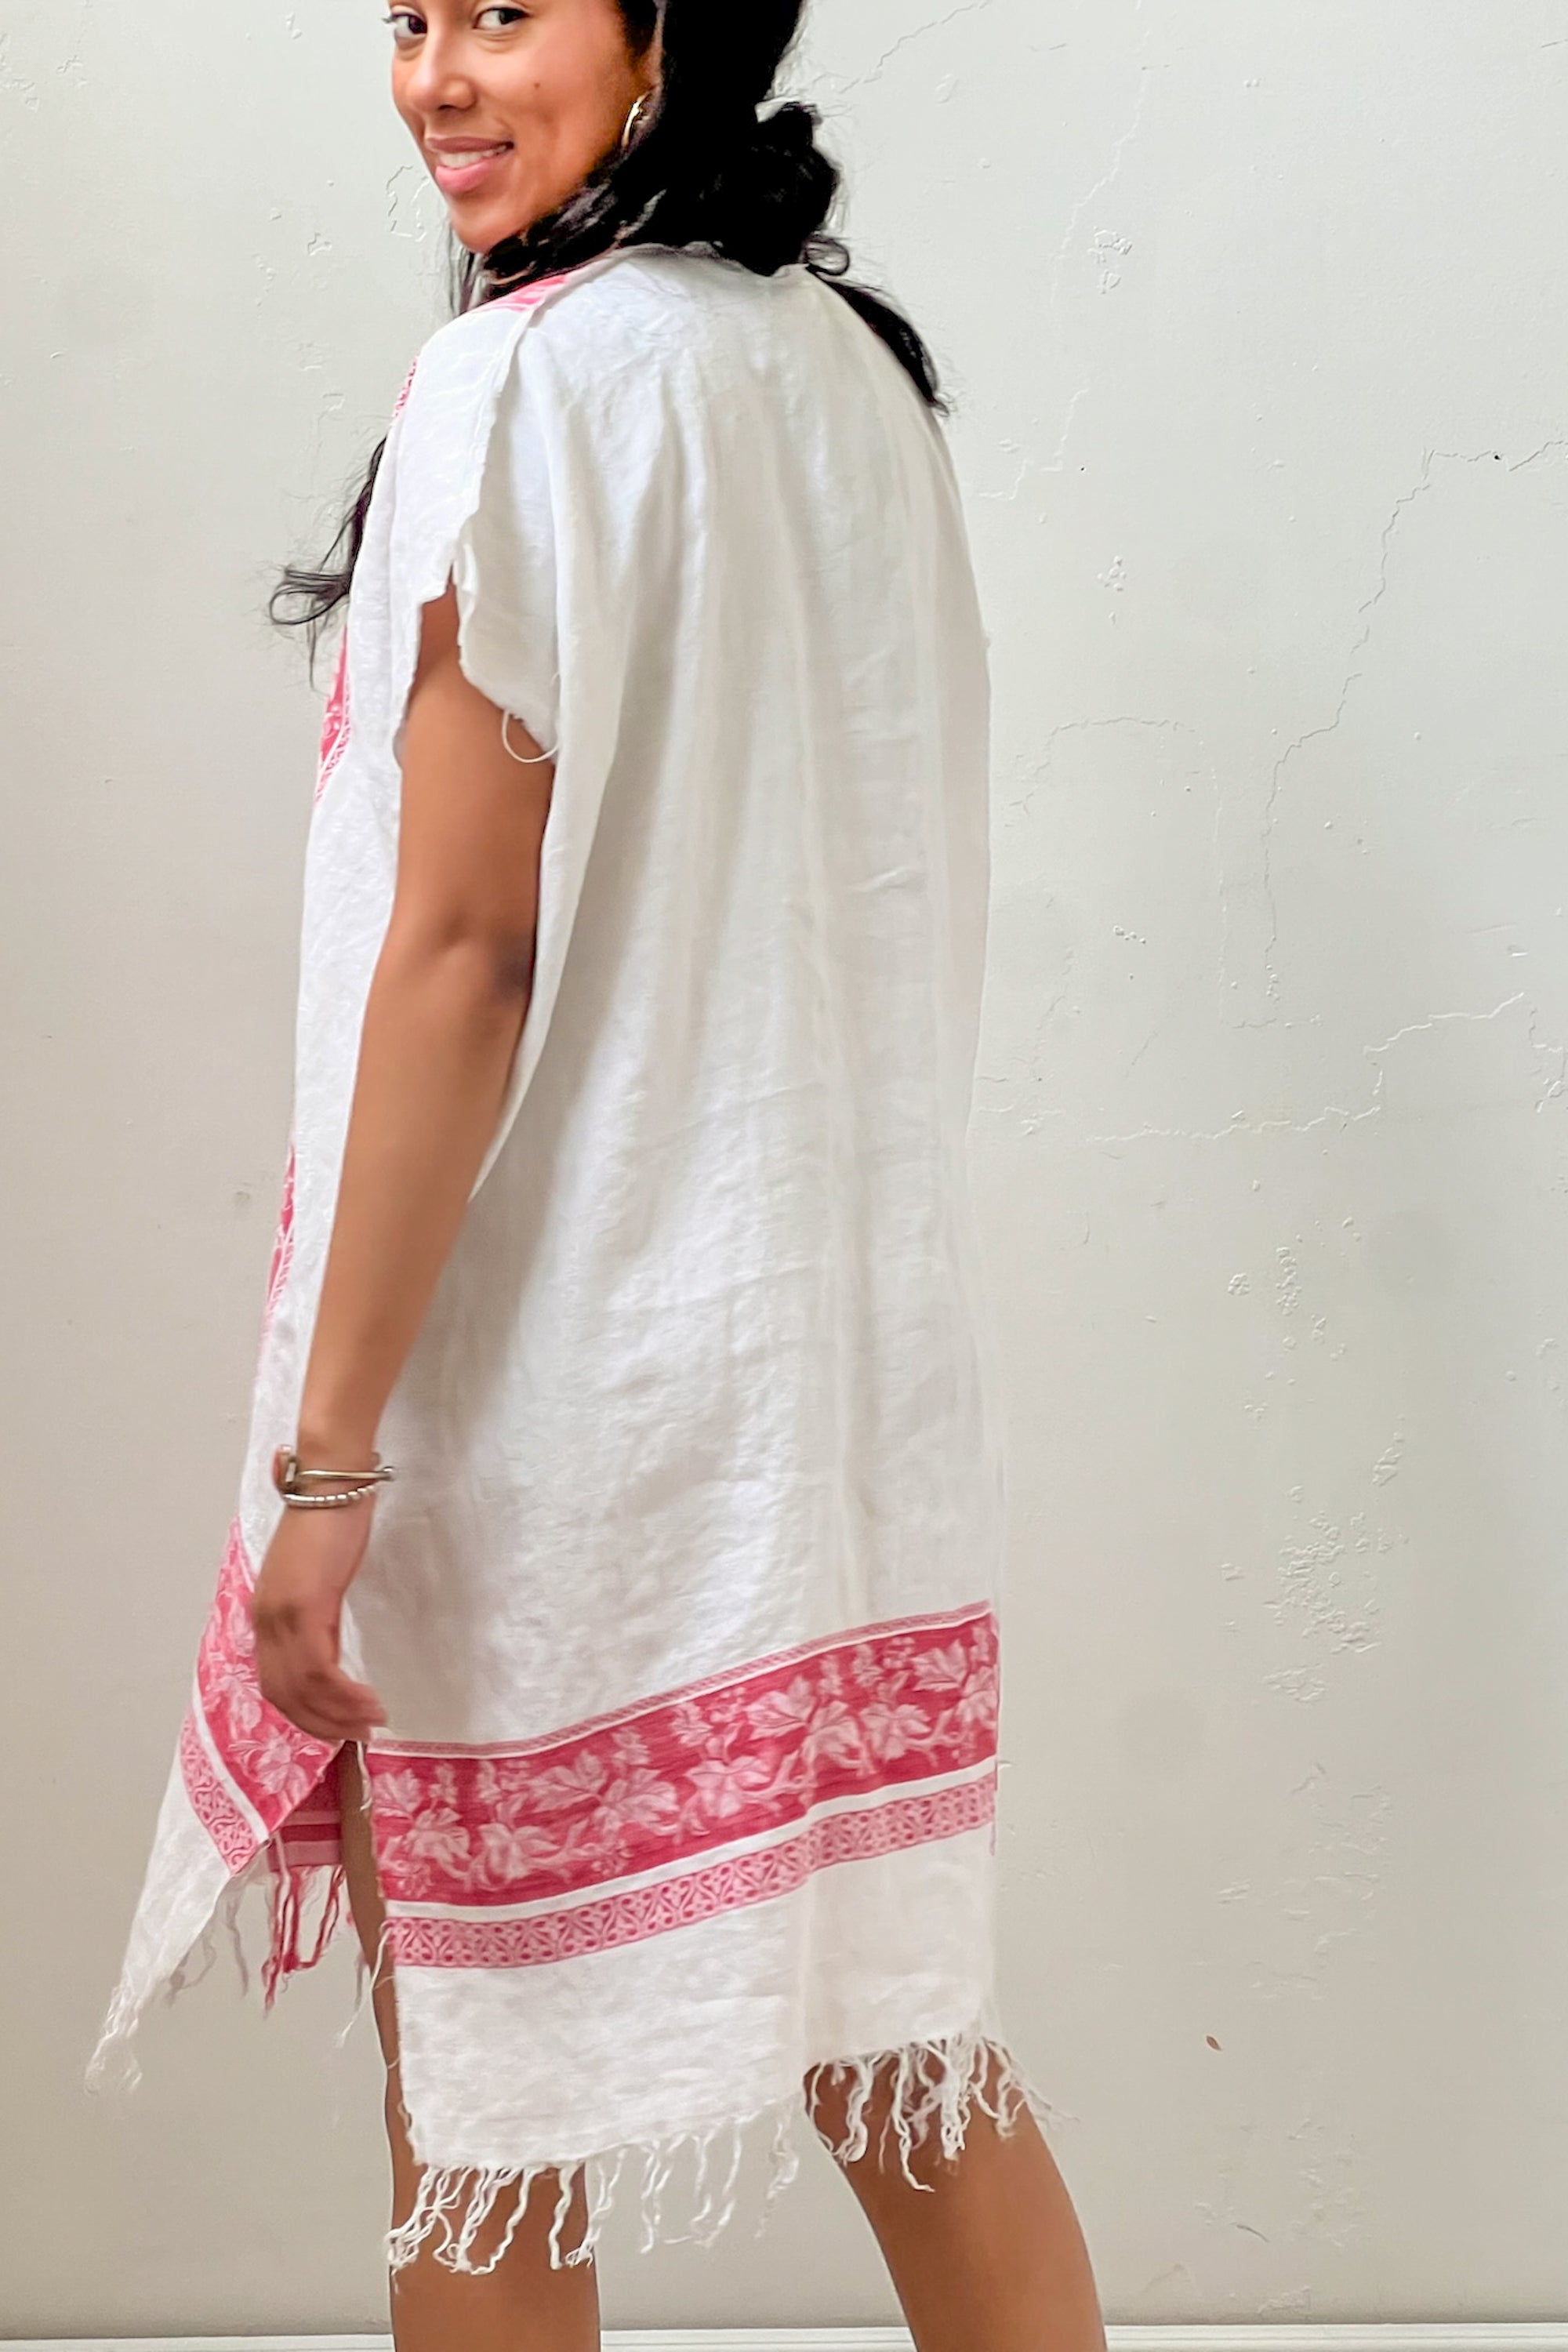 Anna Corinna Reworked Vintage Rouge Blanc Woven Damask Smock Dress